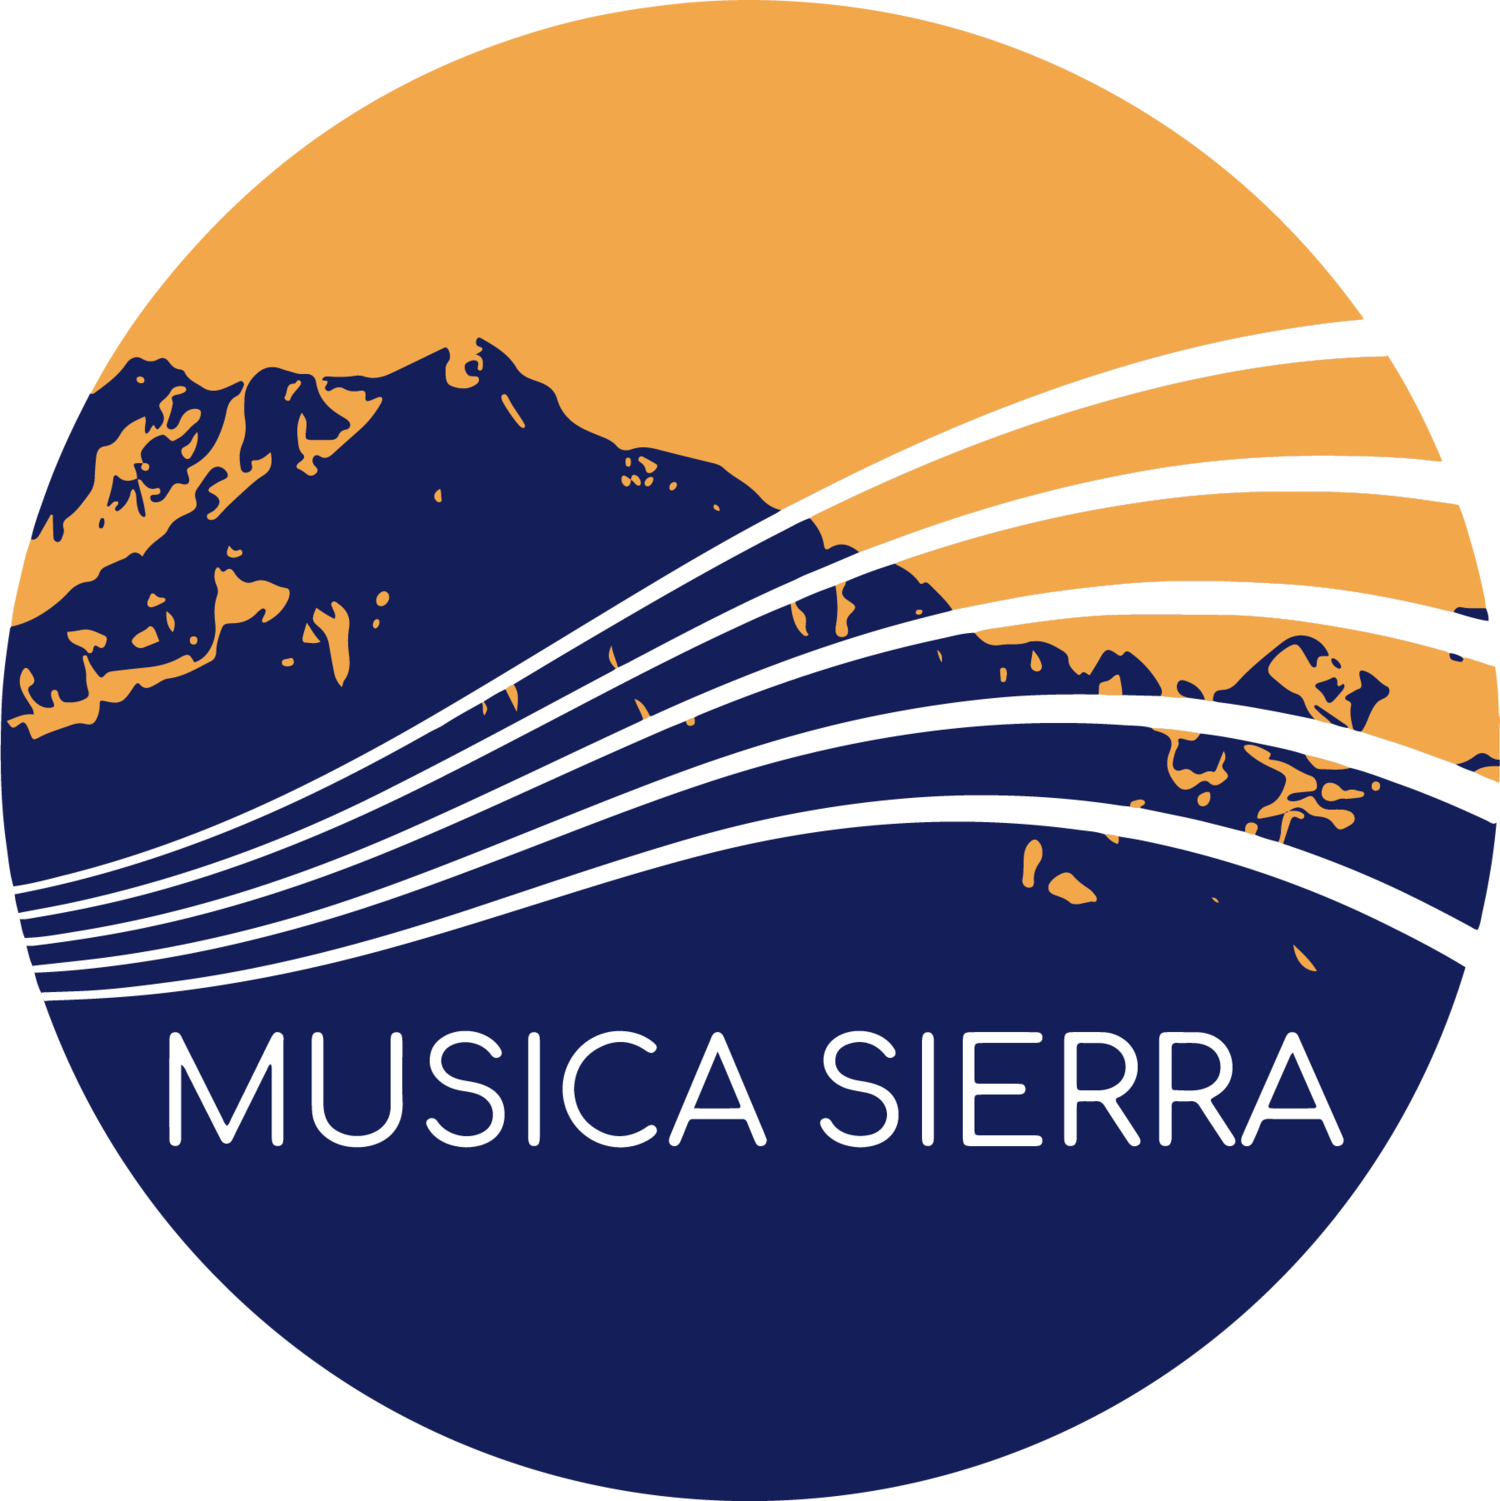 Musica Sierra